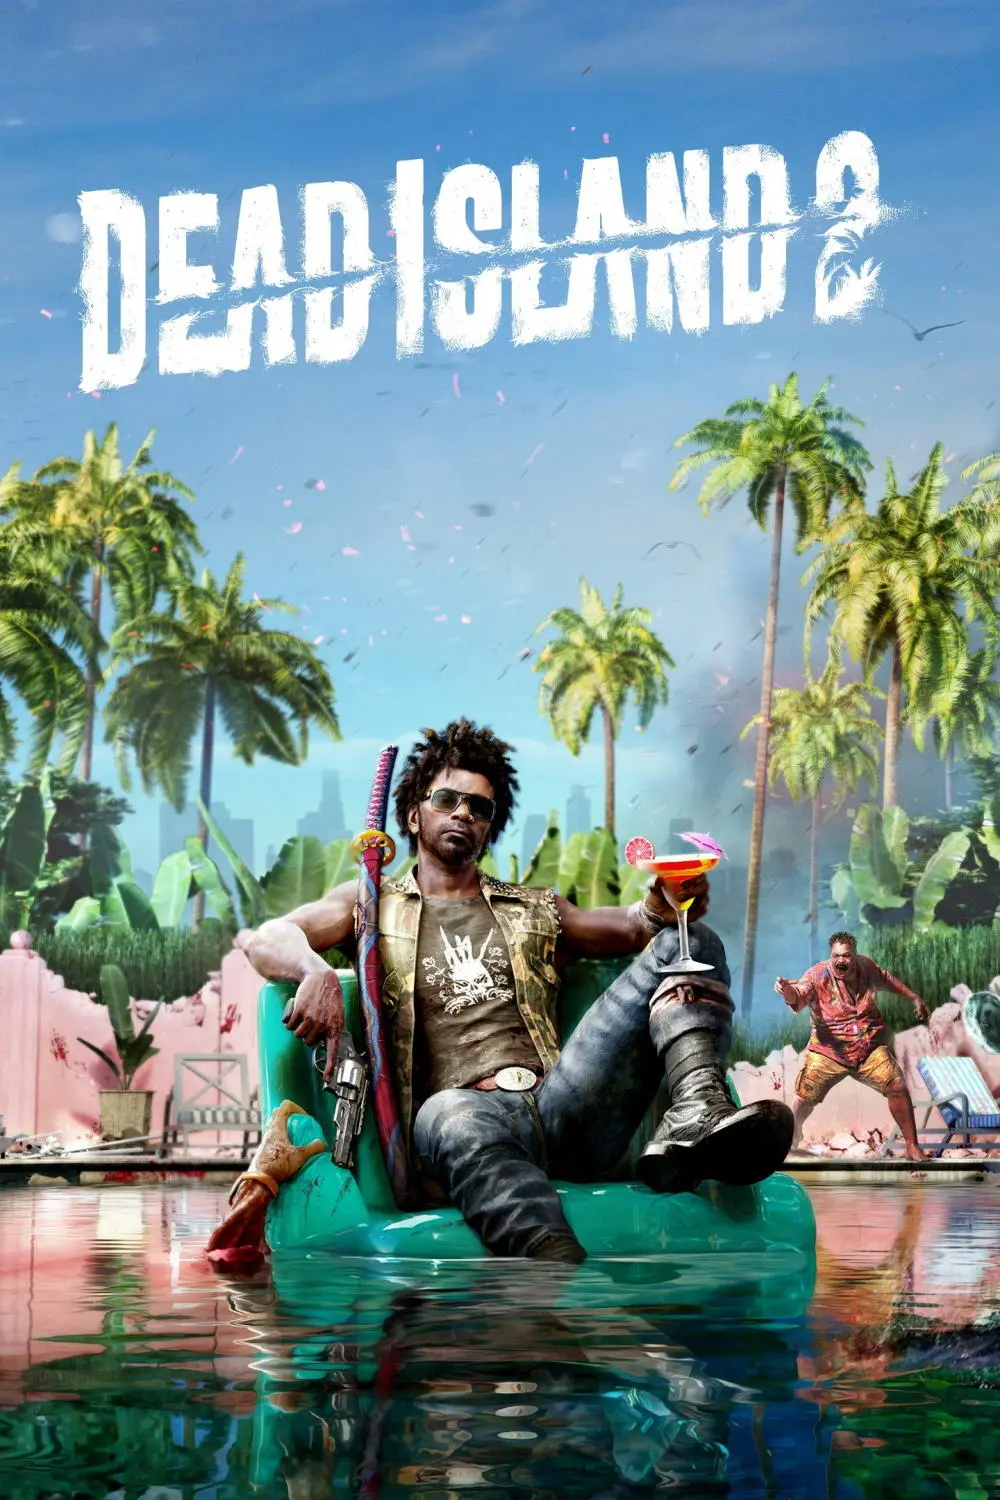 Dead Island 2 (PC) - Epic Games - Digital Code